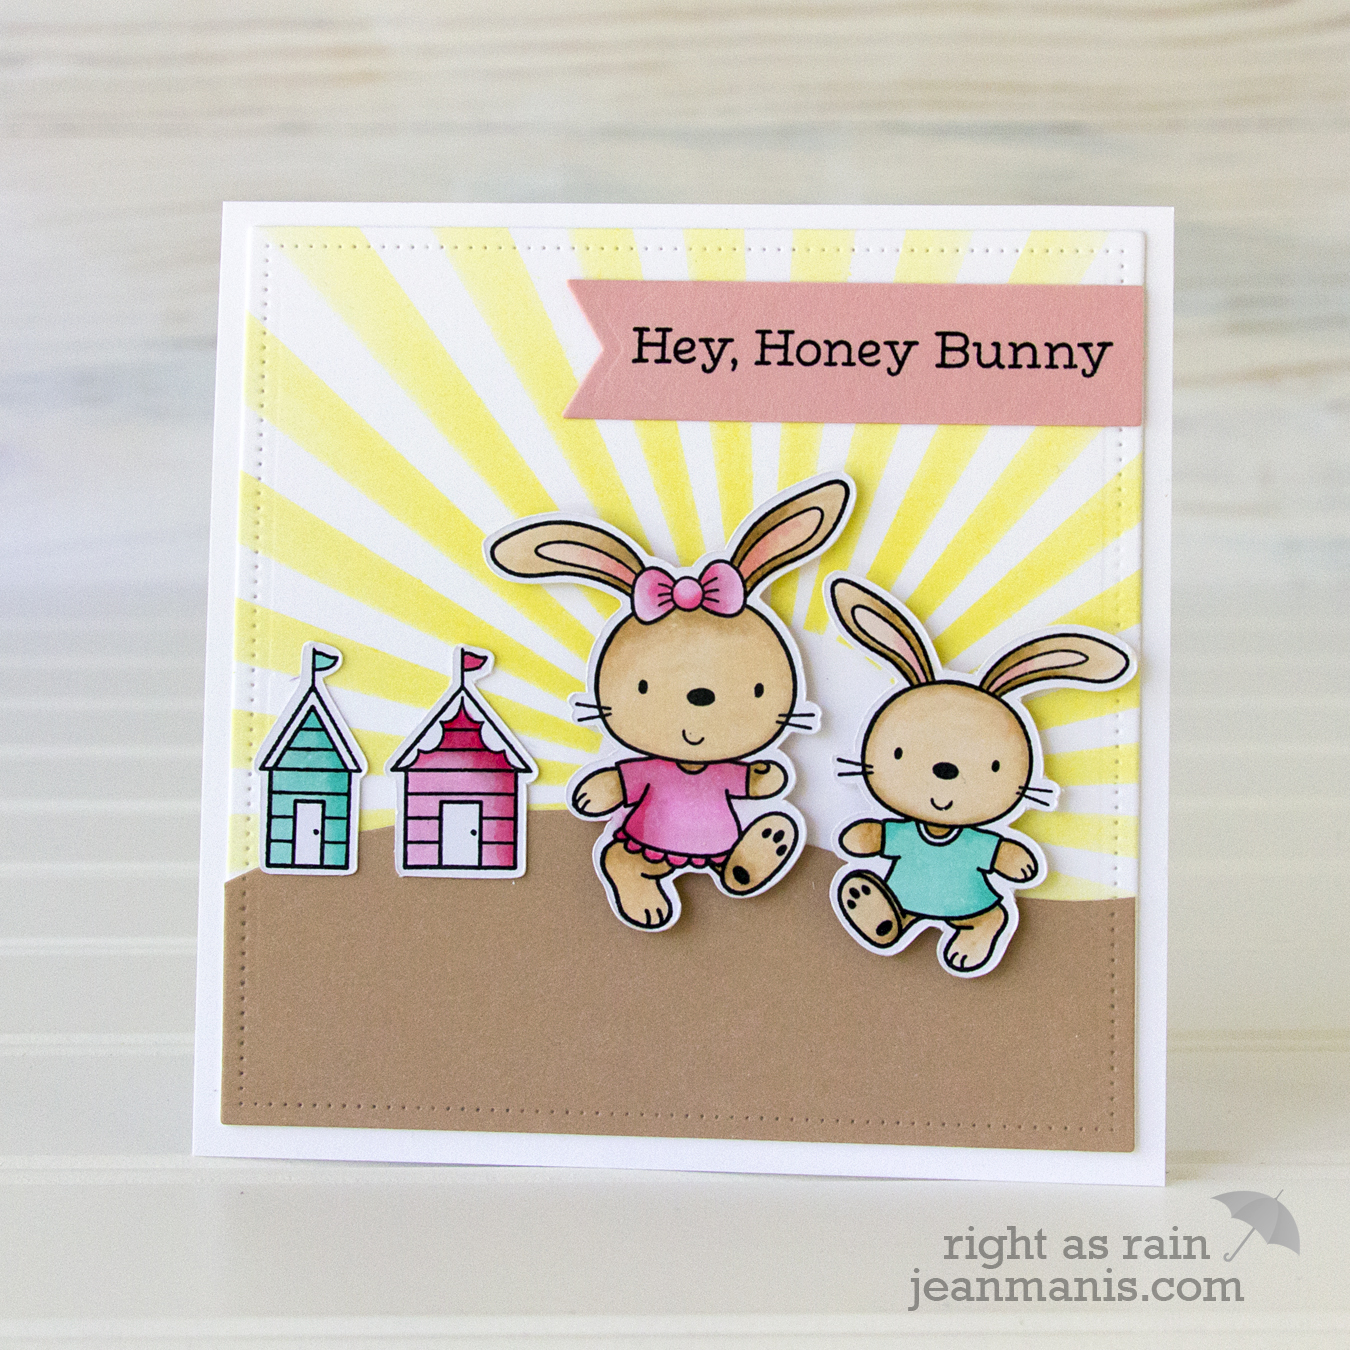 My Favorite Things - Hey, Honey Bunny